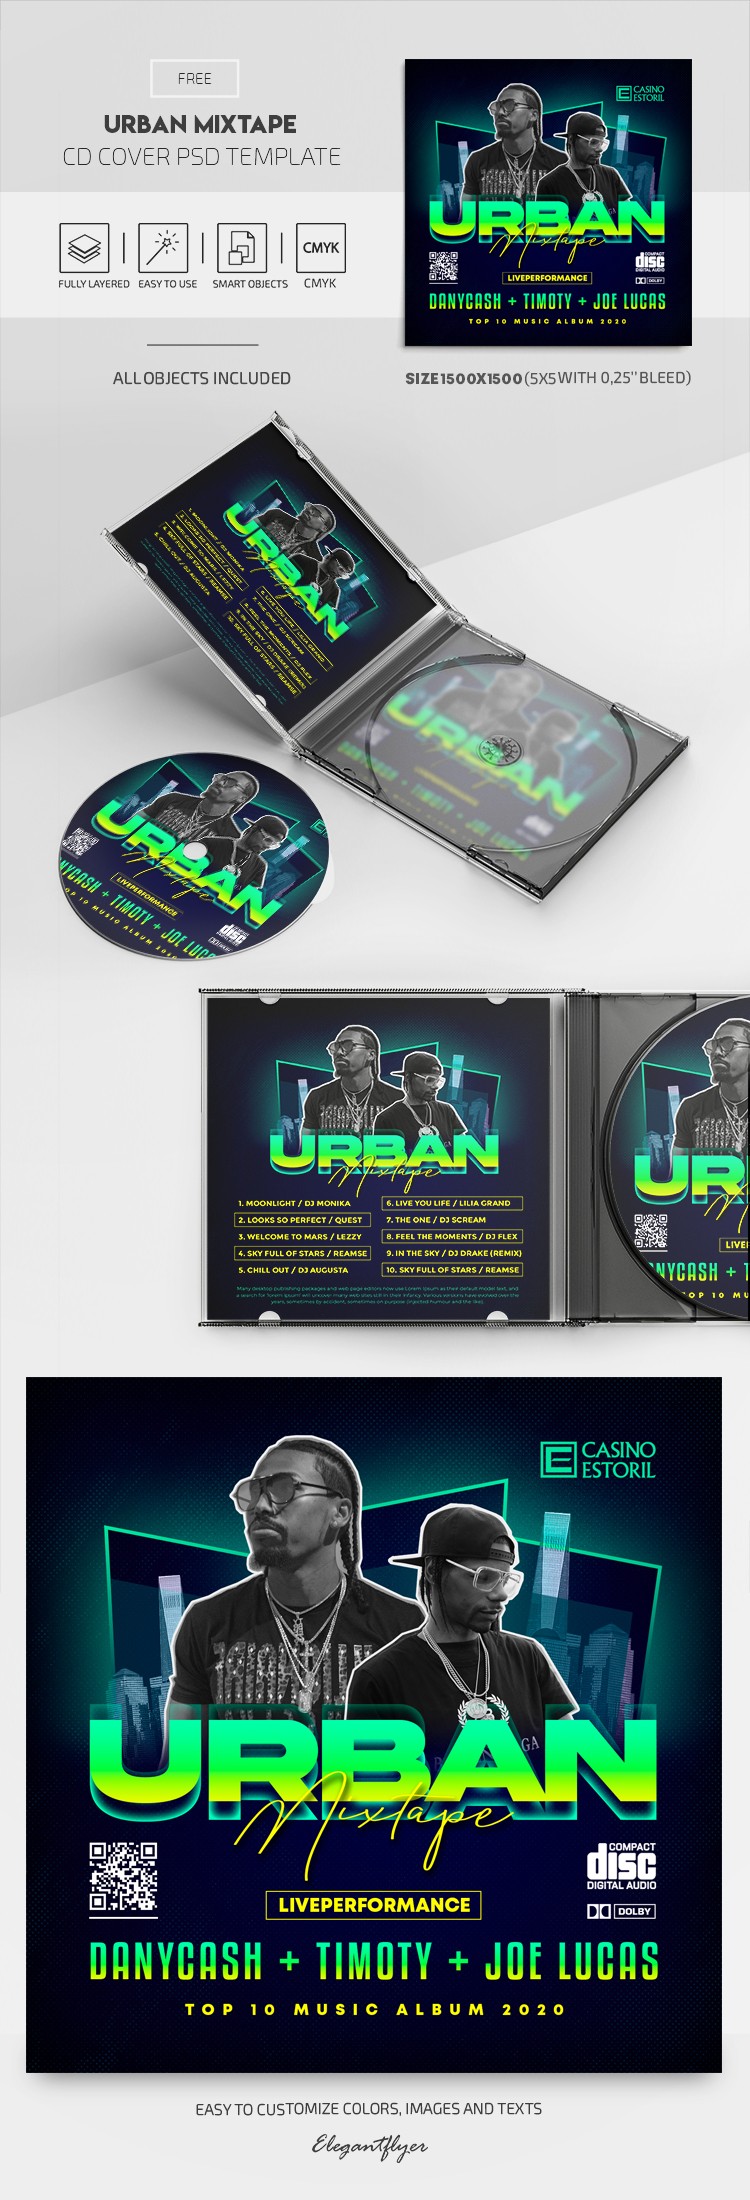 Urban Mixtape CD Cover by ElegantFlyer